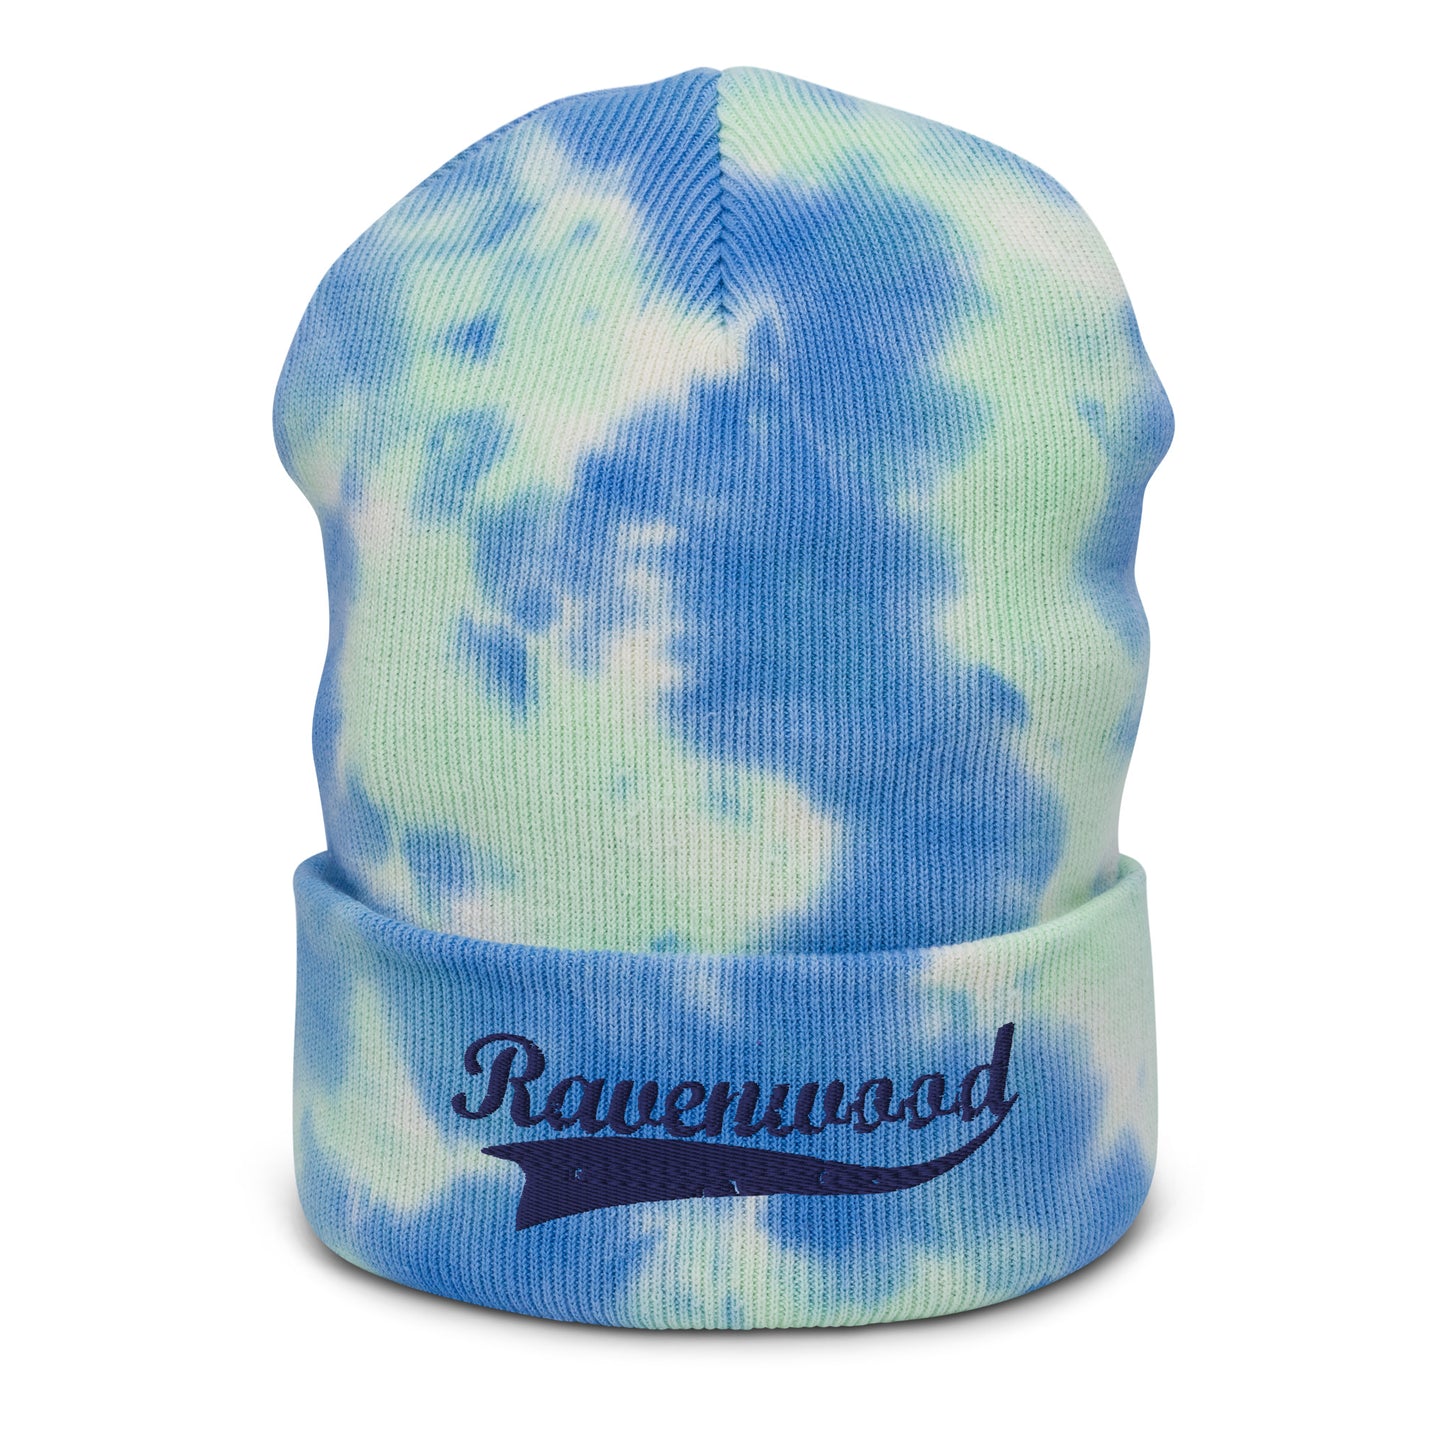 Ravenwood Tie-dye beanie